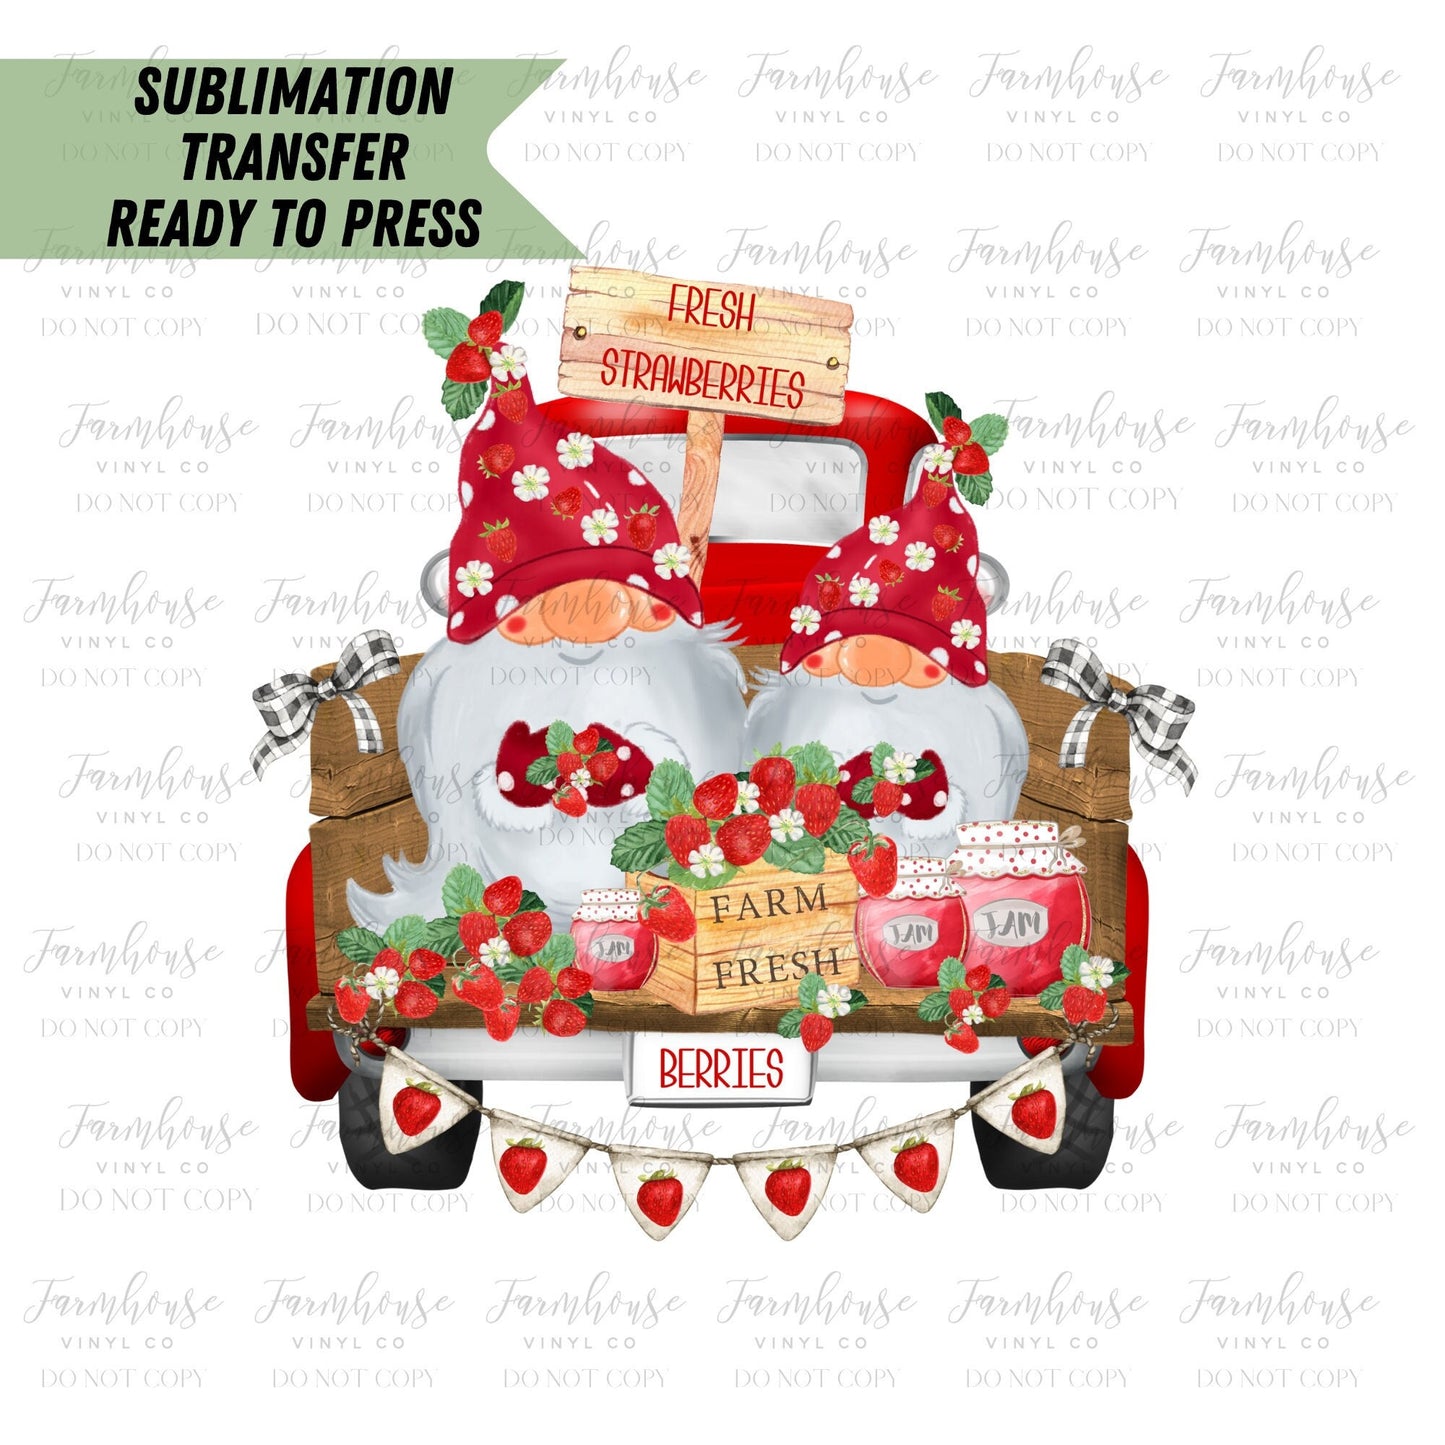 Gnomes Strawberry Truck Ready to Press Sublimation Transfer - Farmhouse Vinyl Co